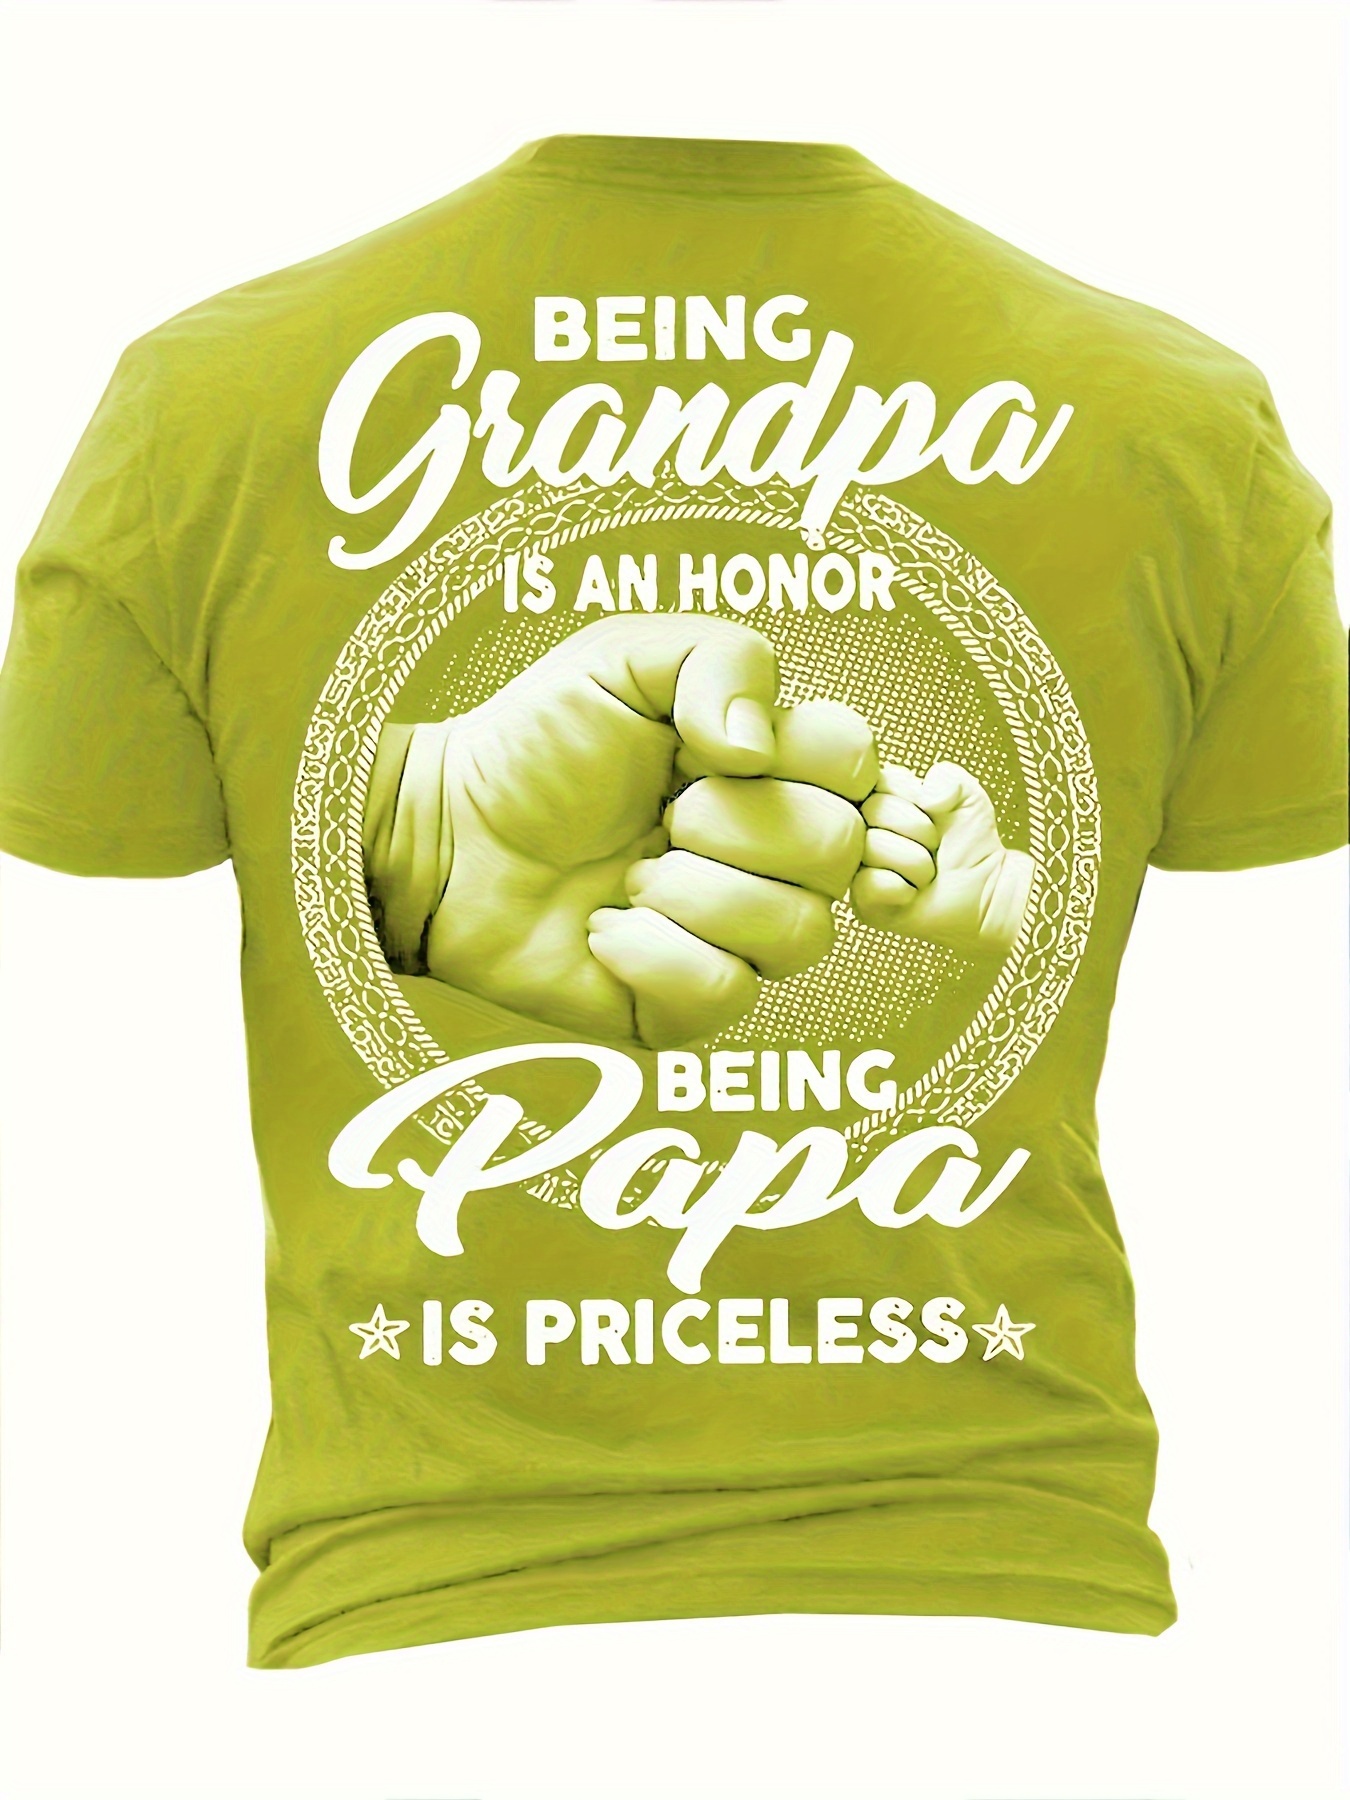 Unisex Tee T-shirt Love Grandpa Shirt Letter Printed Grandpa's